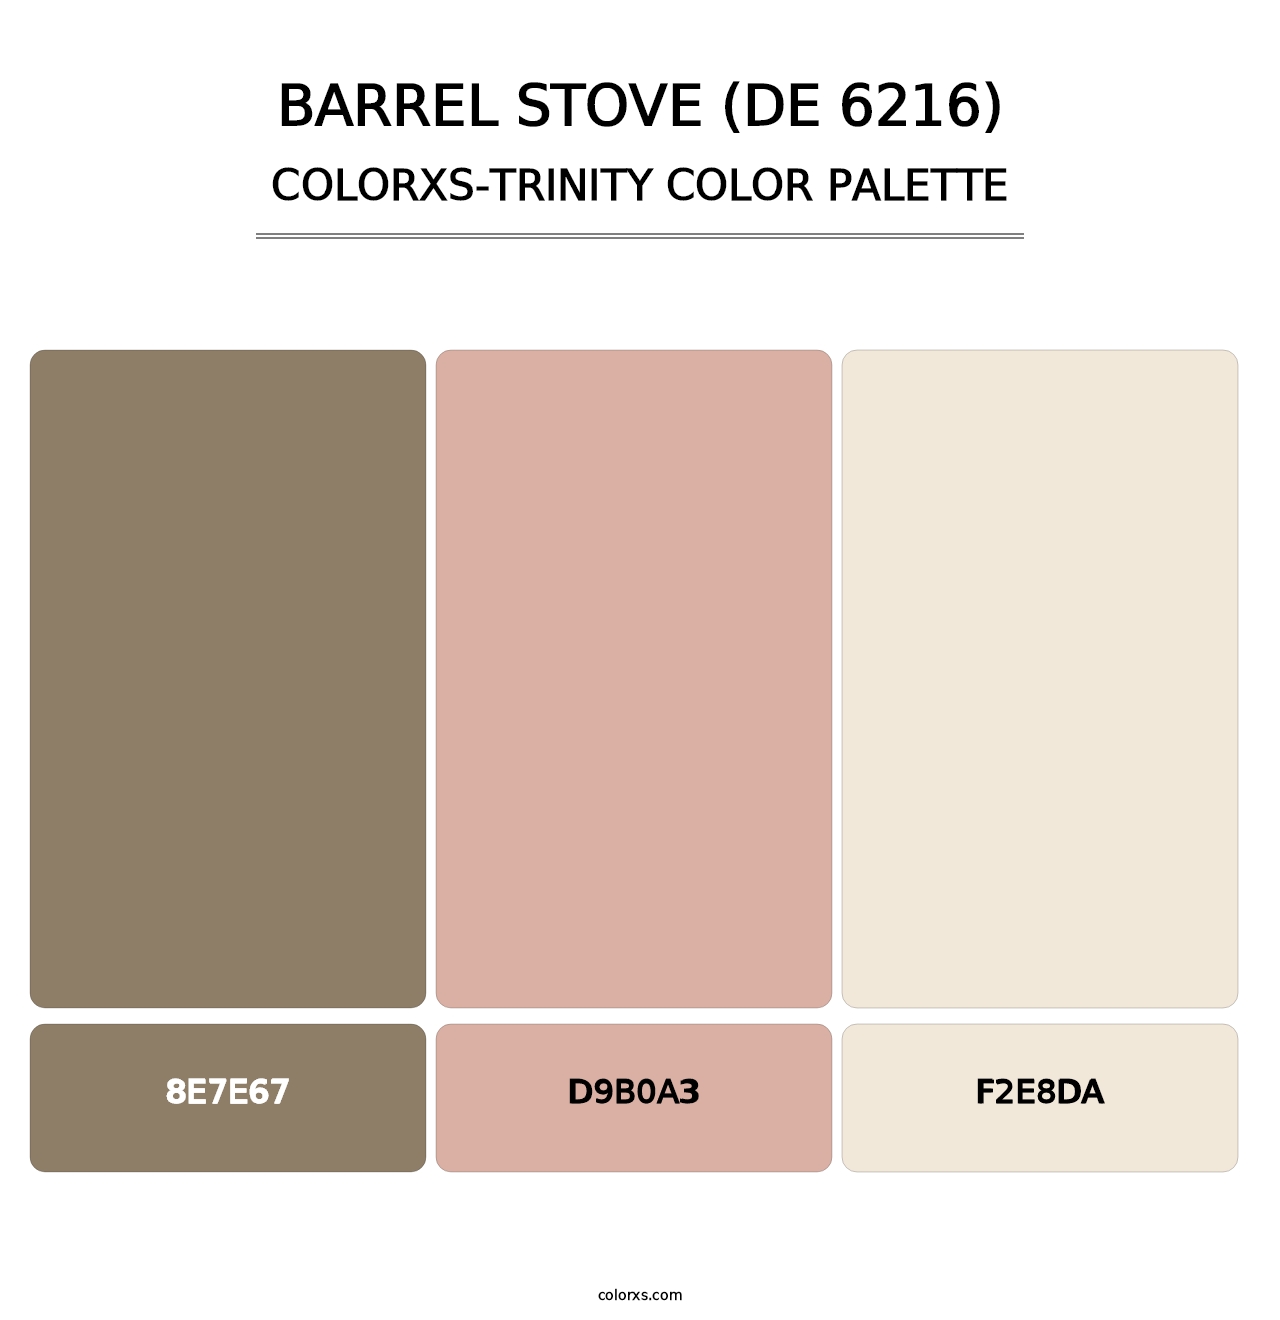 Barrel Stove (DE 6216) - Colorxs Trinity Palette